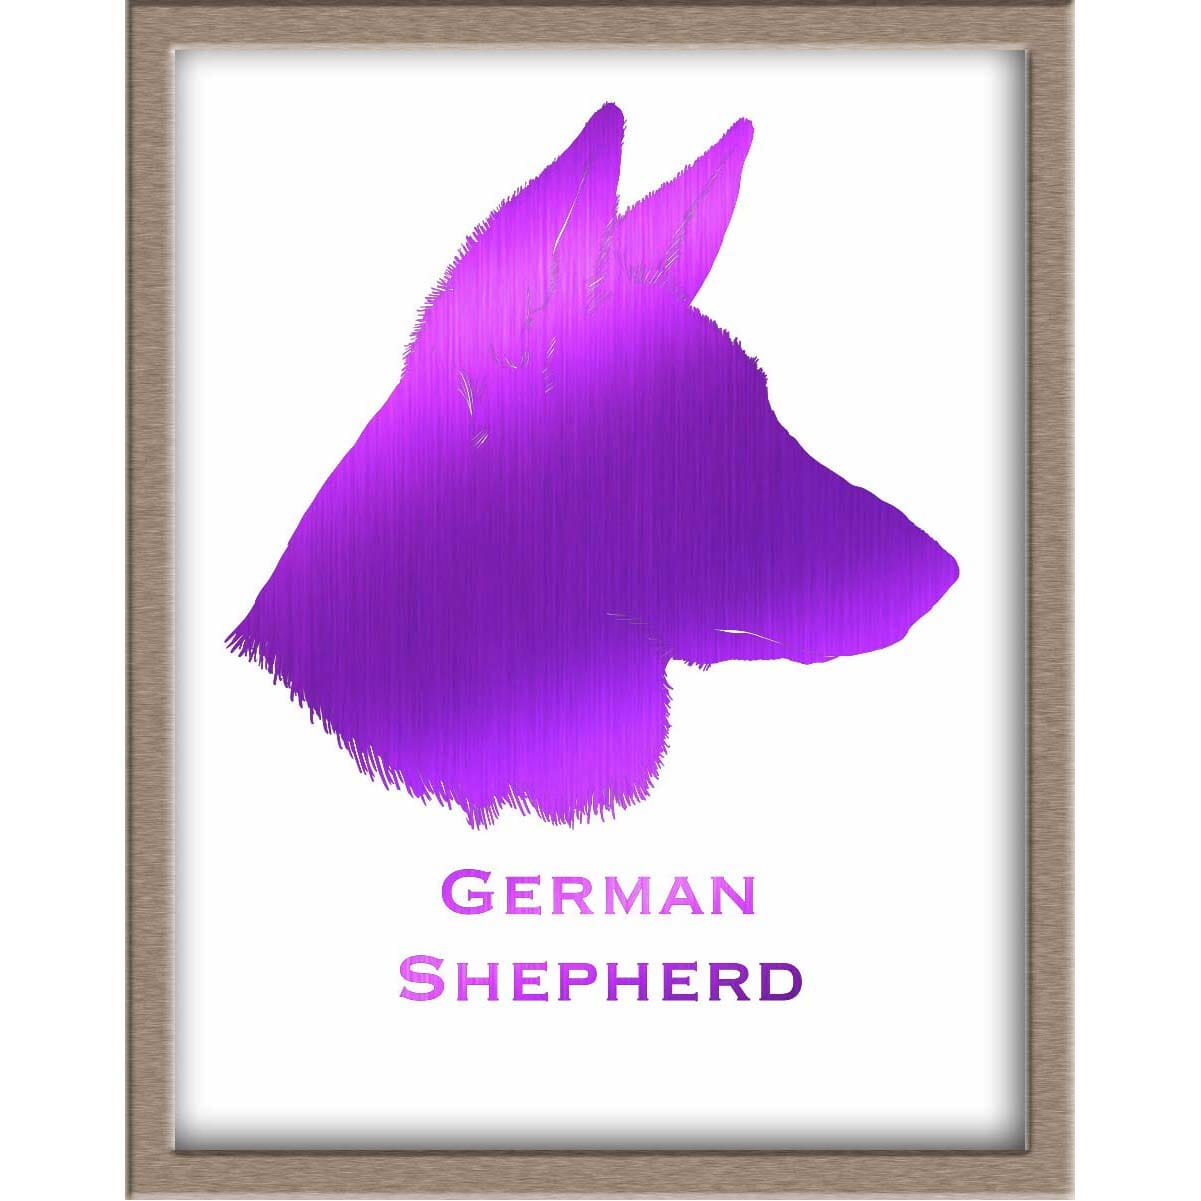 German Shepherd Silhouette Foiled Print Posters, Prints, & Visual Artwork JoyousJoyfulJoyness 